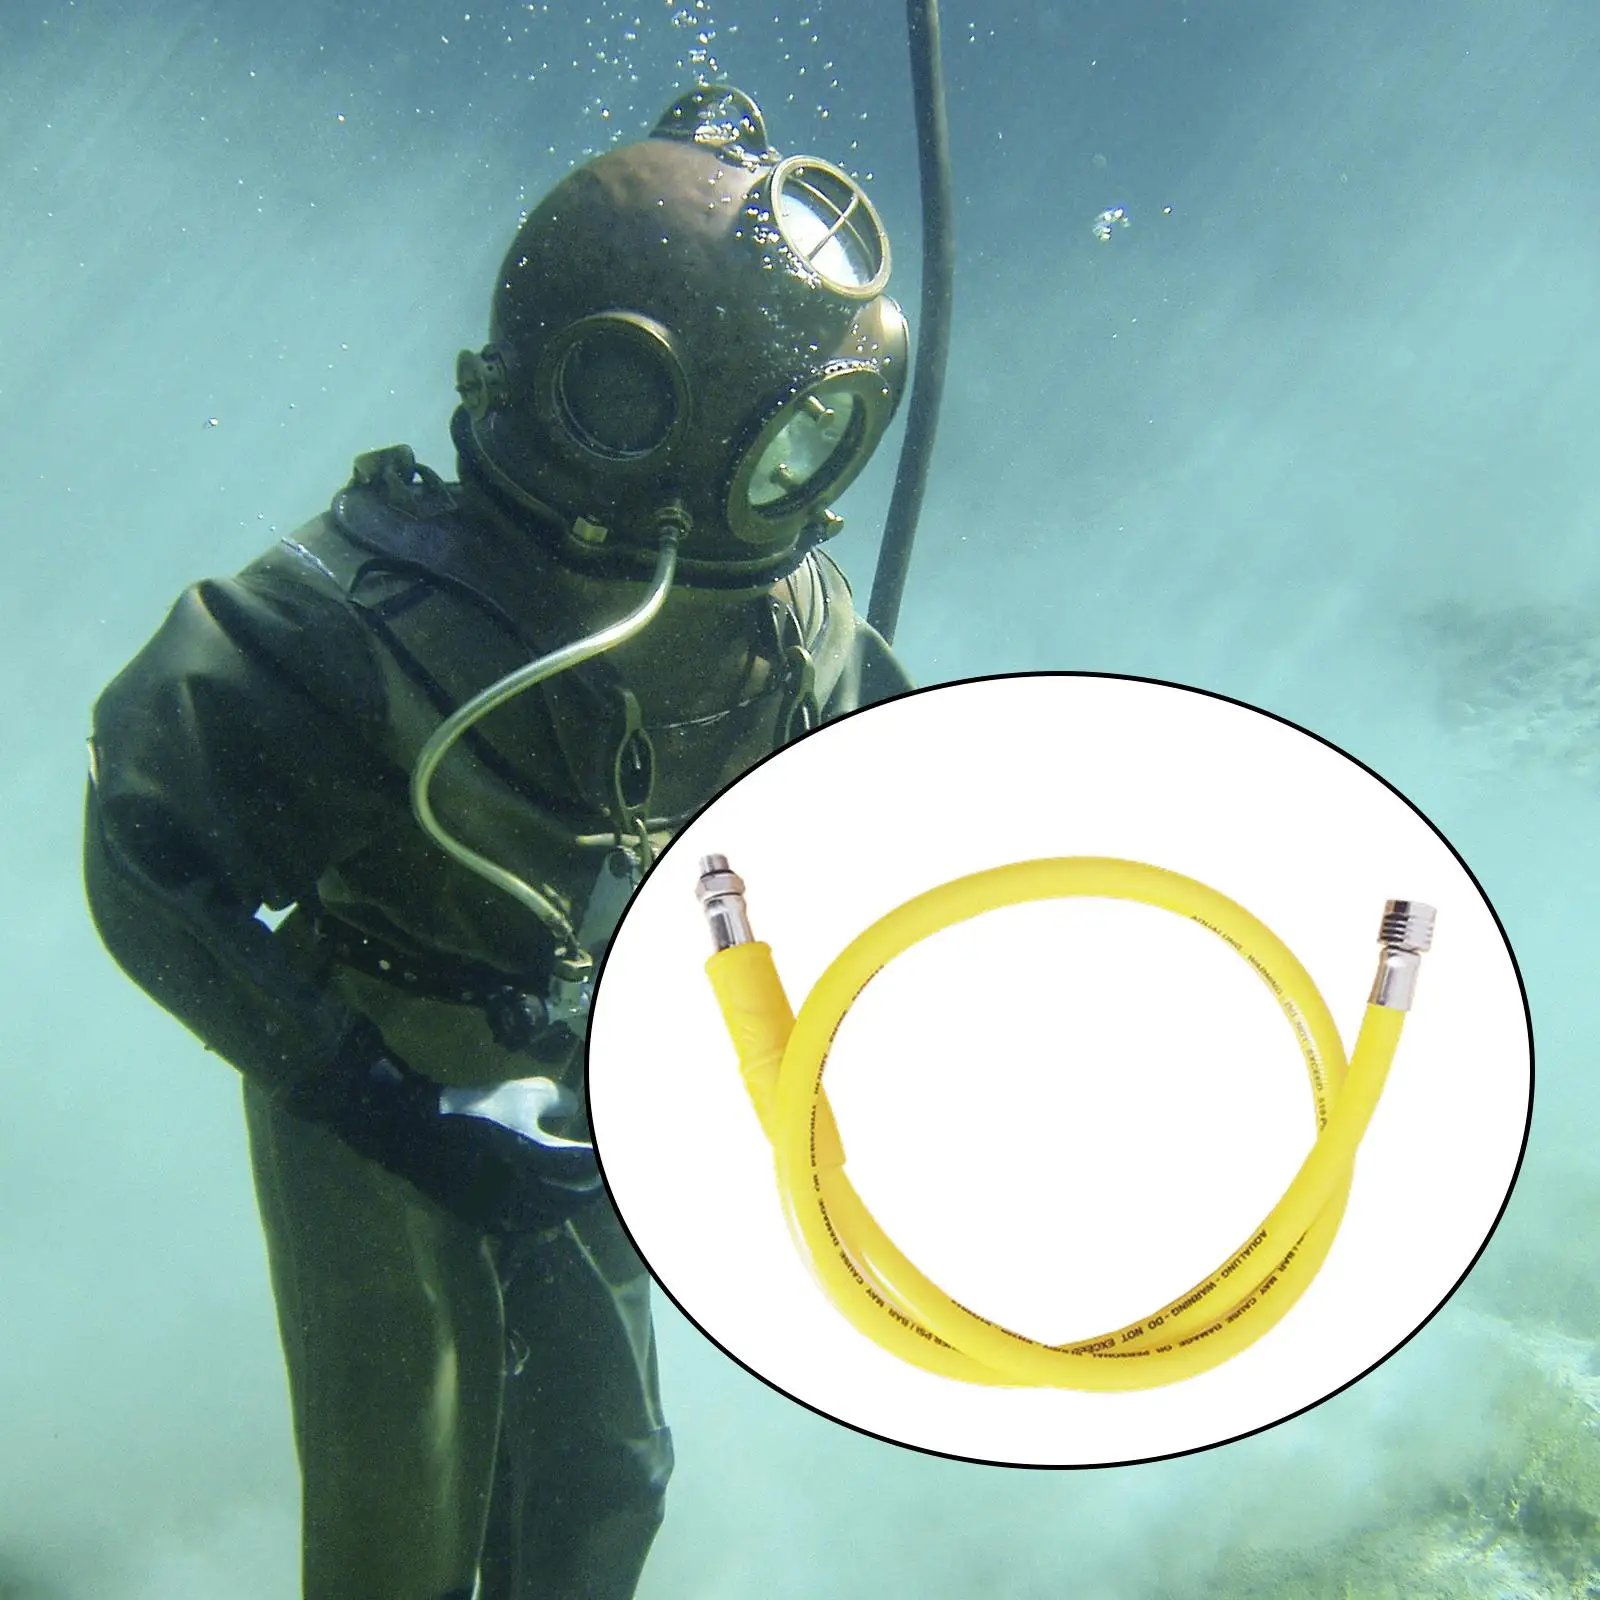 Submersible Medium Pressure Hose Breath Adjuster Practical Lightweight Portable Scuba Diving Regulator for Diving Equipment